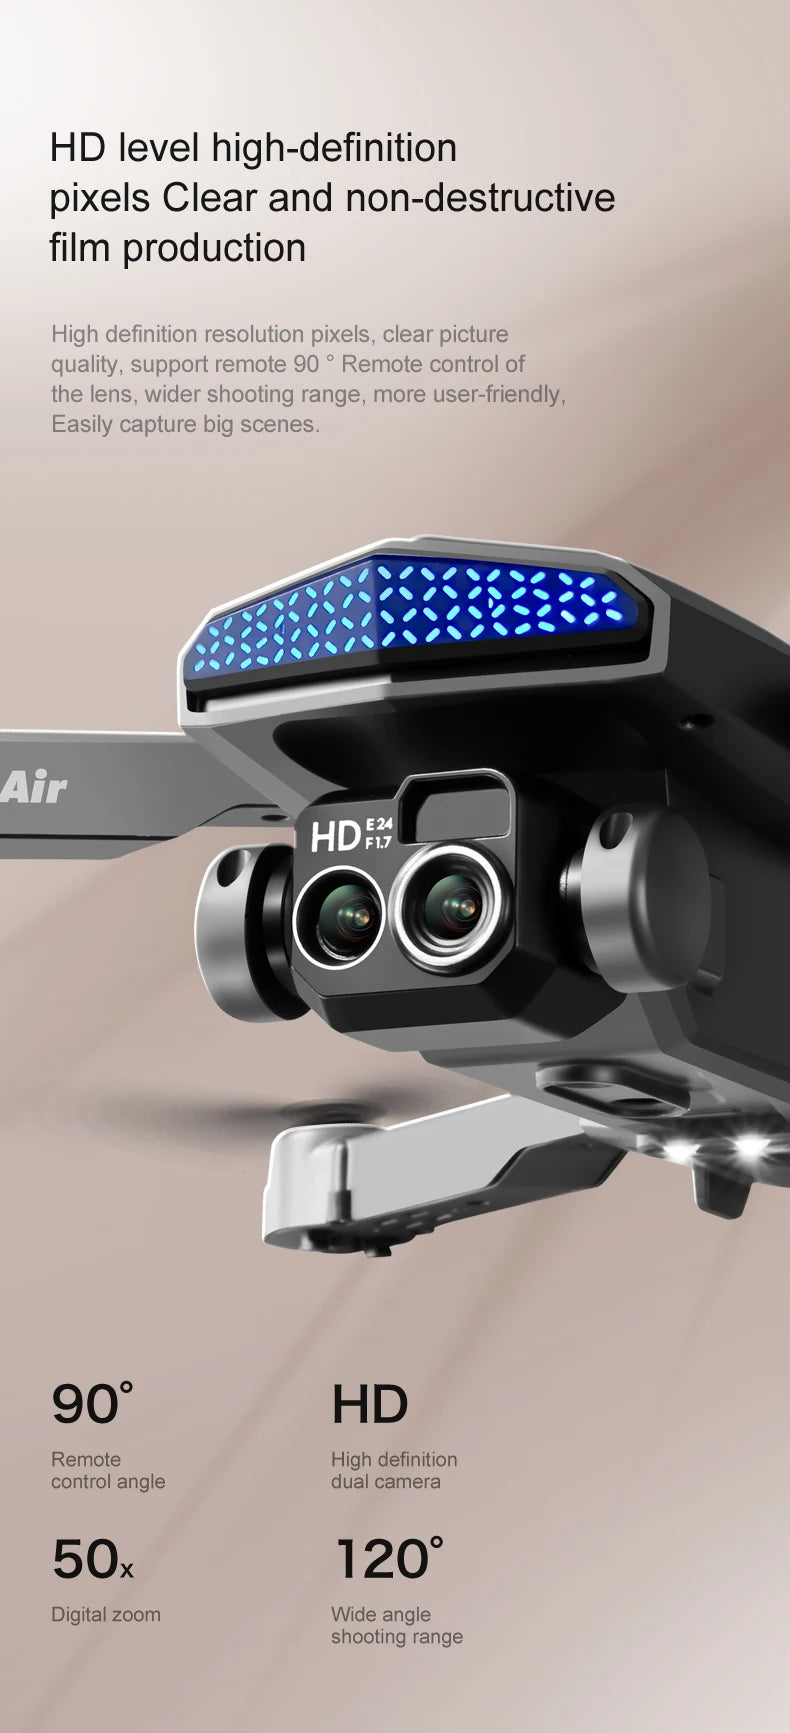 D6 Drone - 8K Professional Dual Camera, d6 drone, air e24 hd= f1z 90 